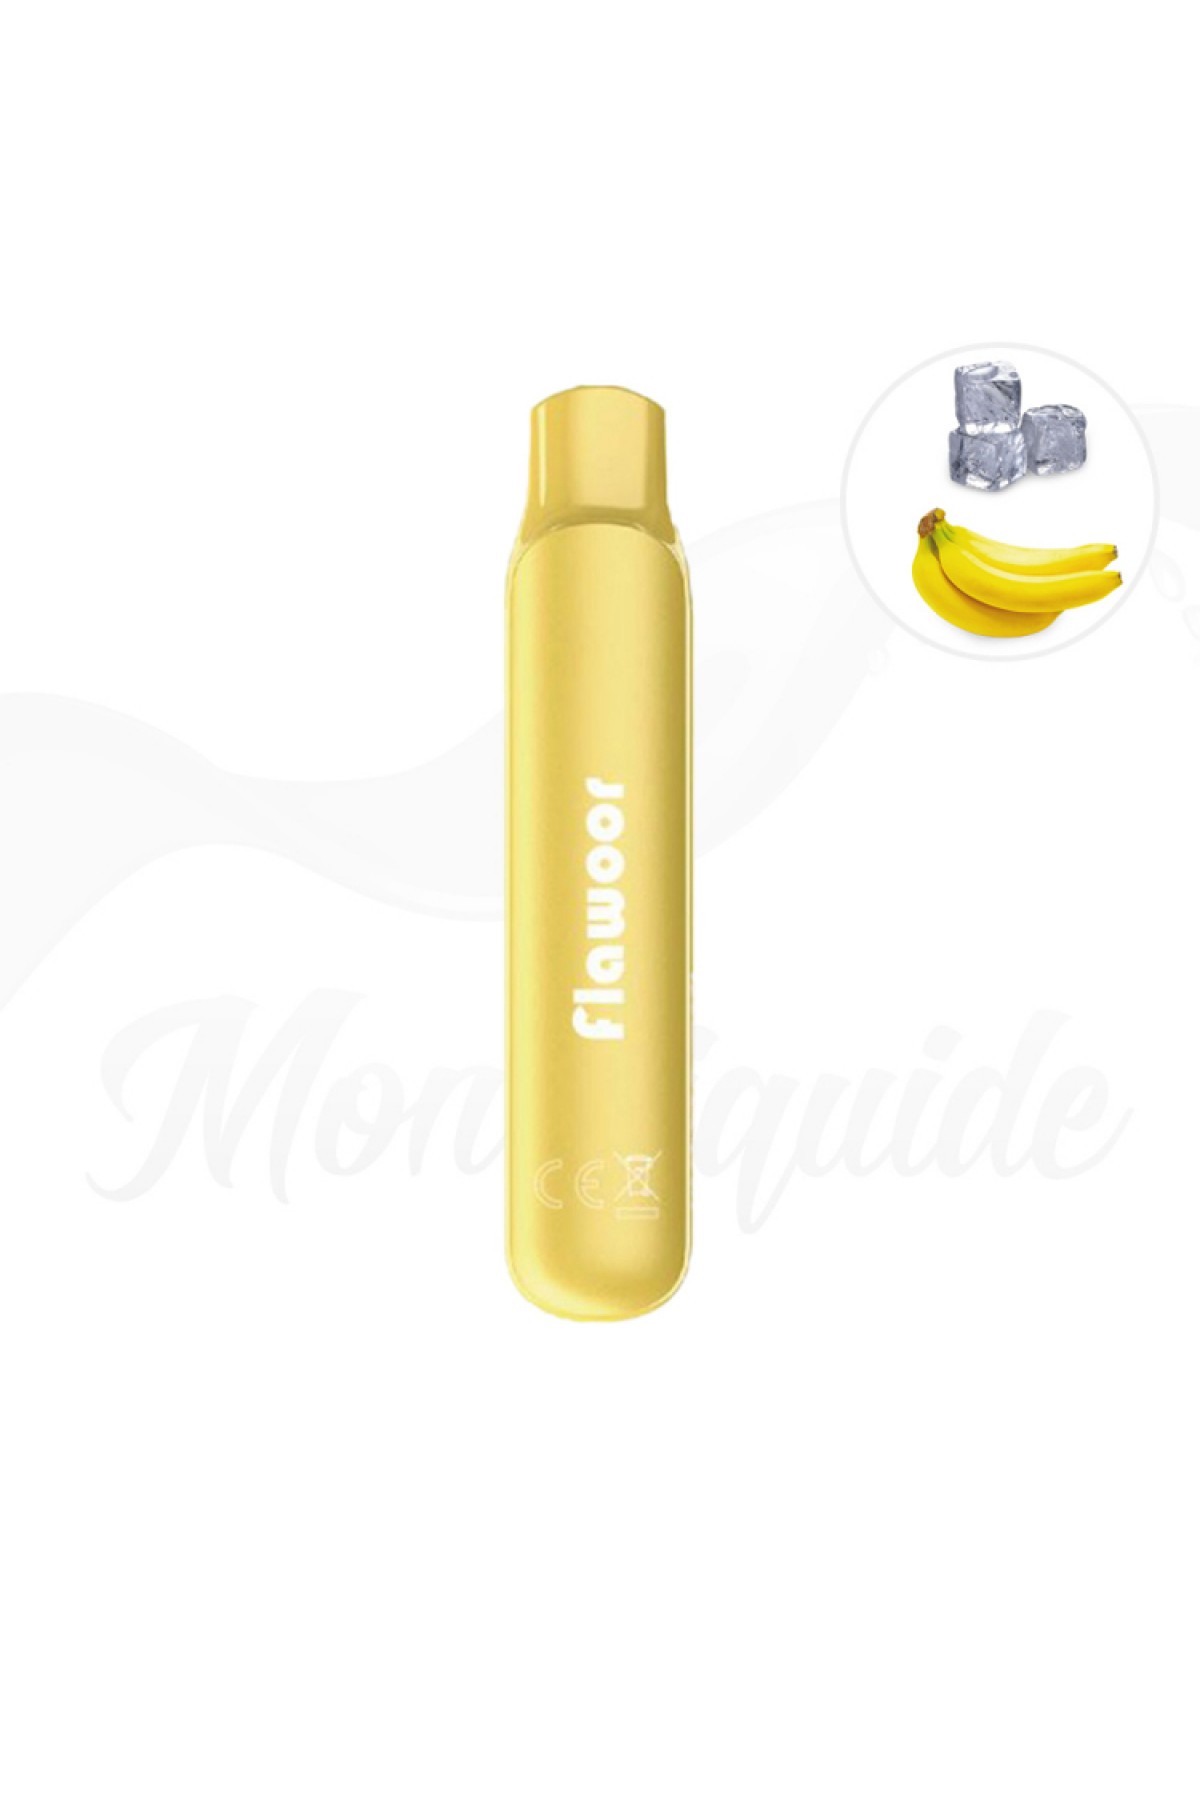 Flawoor Mate - Banane Glacée 600 Puff Kit